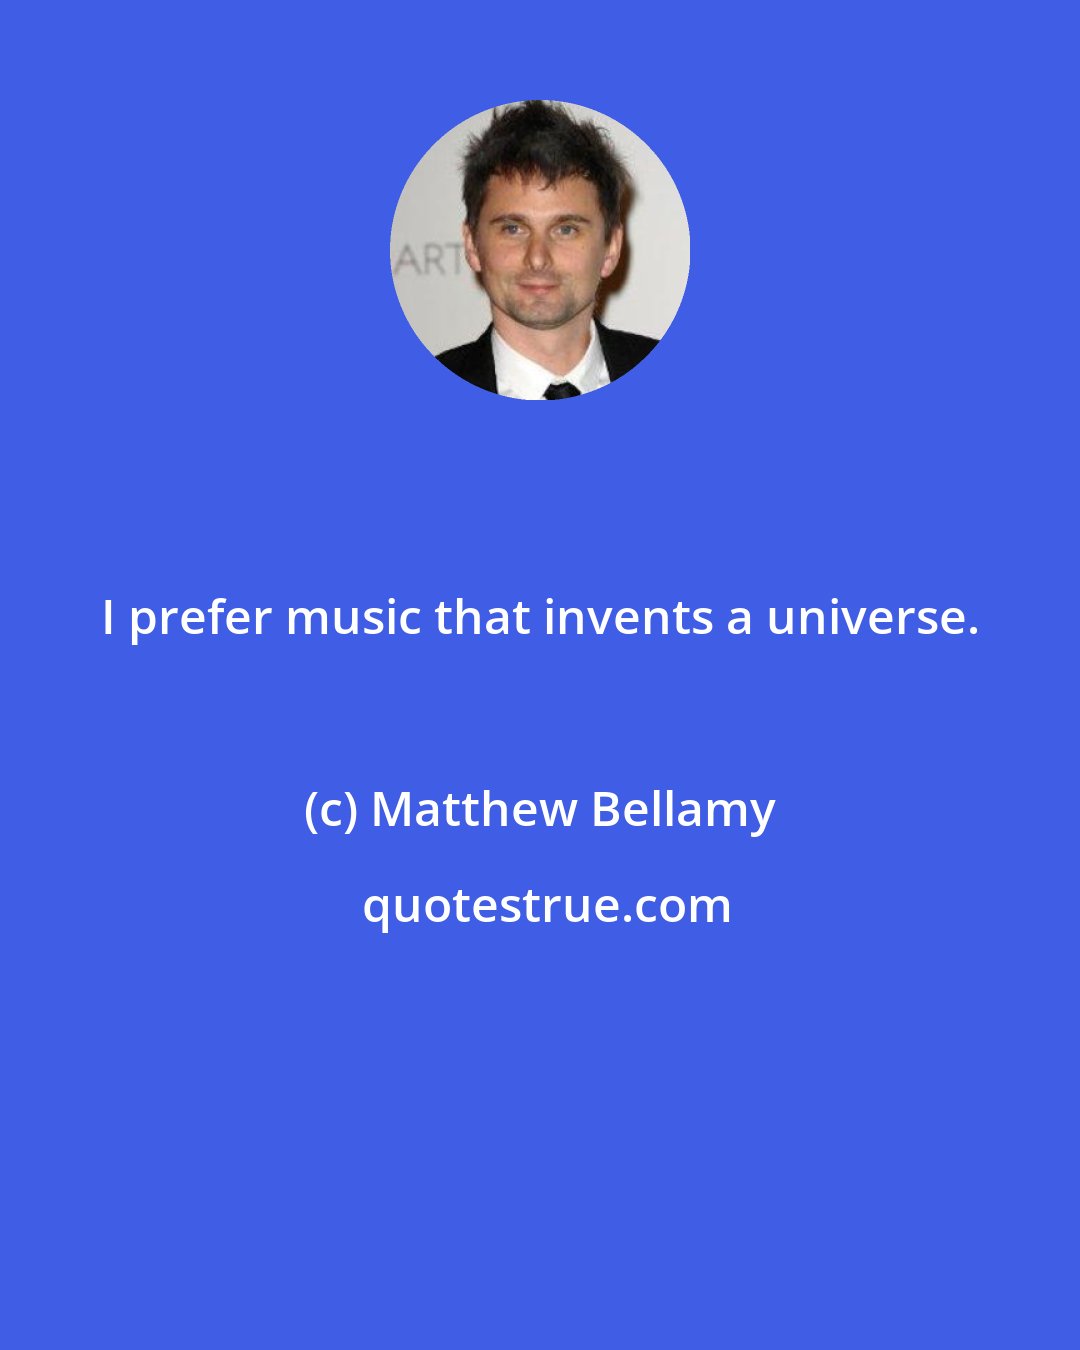 Matthew Bellamy: I prefer music that invents a universe.